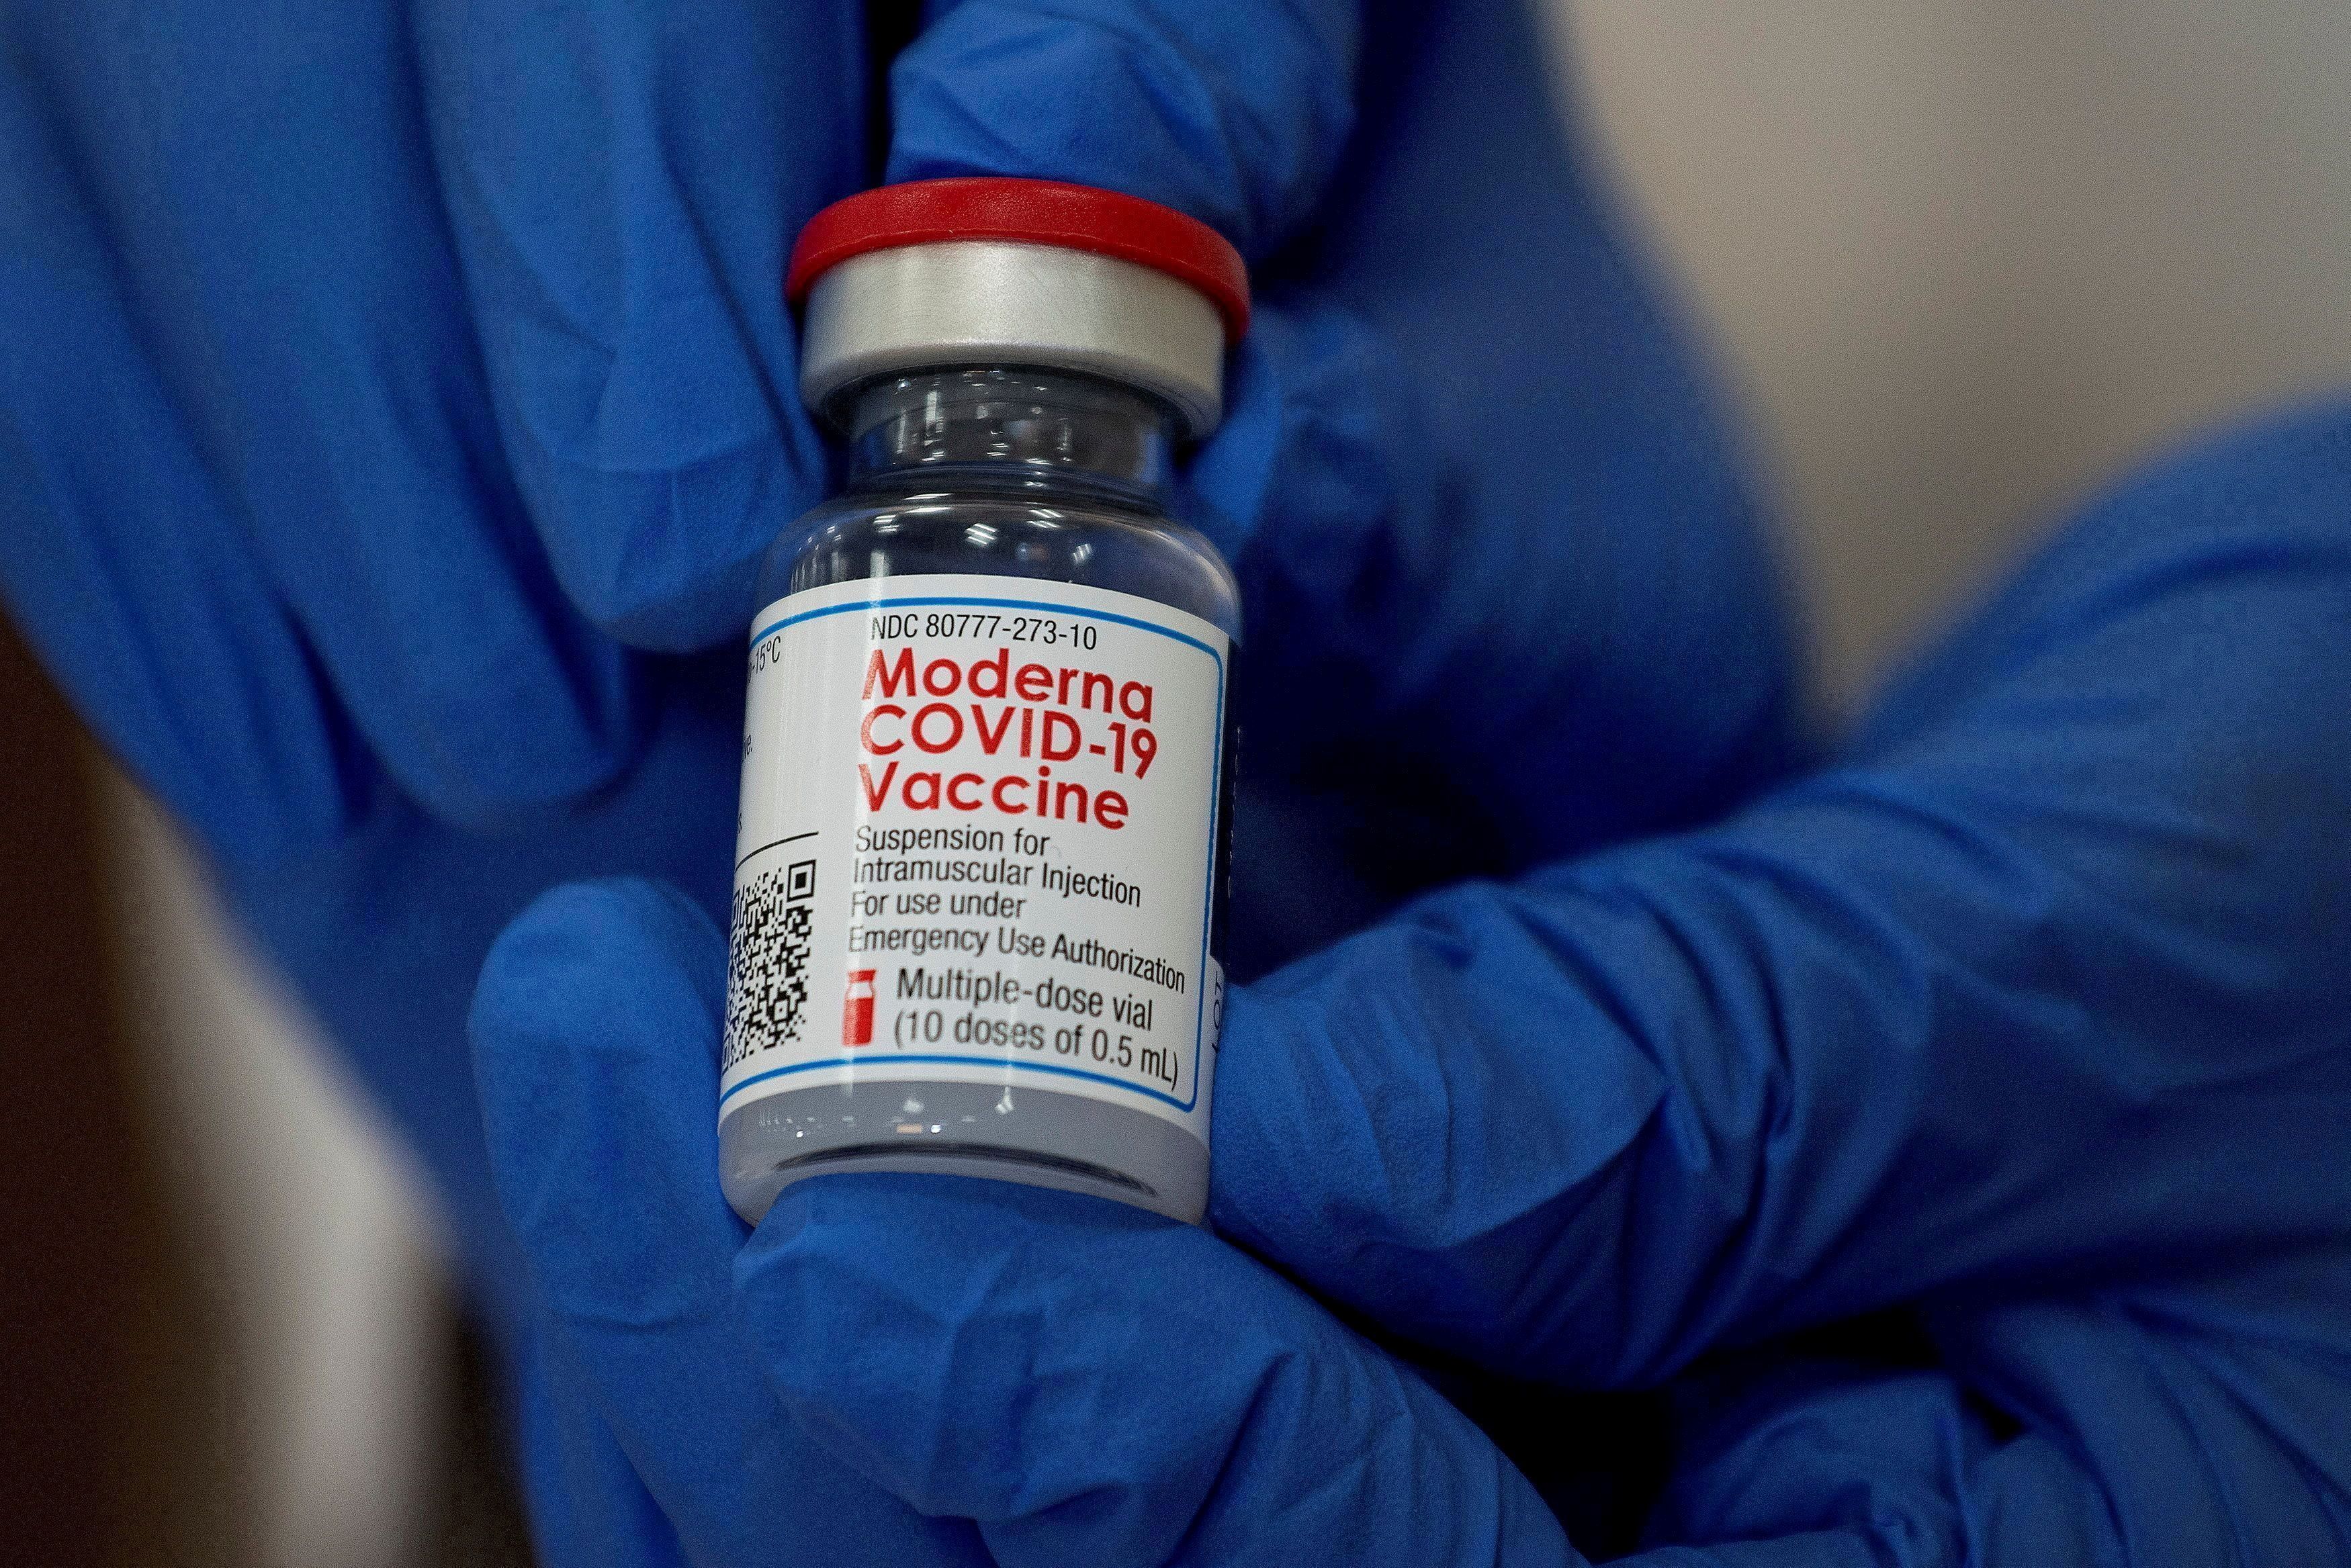 An employee shows the Moderna COVID-19 vaccine at Northwell Health's Long Island Jewish Valley Stream hospital in New York, U.S., December 21, 2020.   REUTERS/Eduardo Munoz